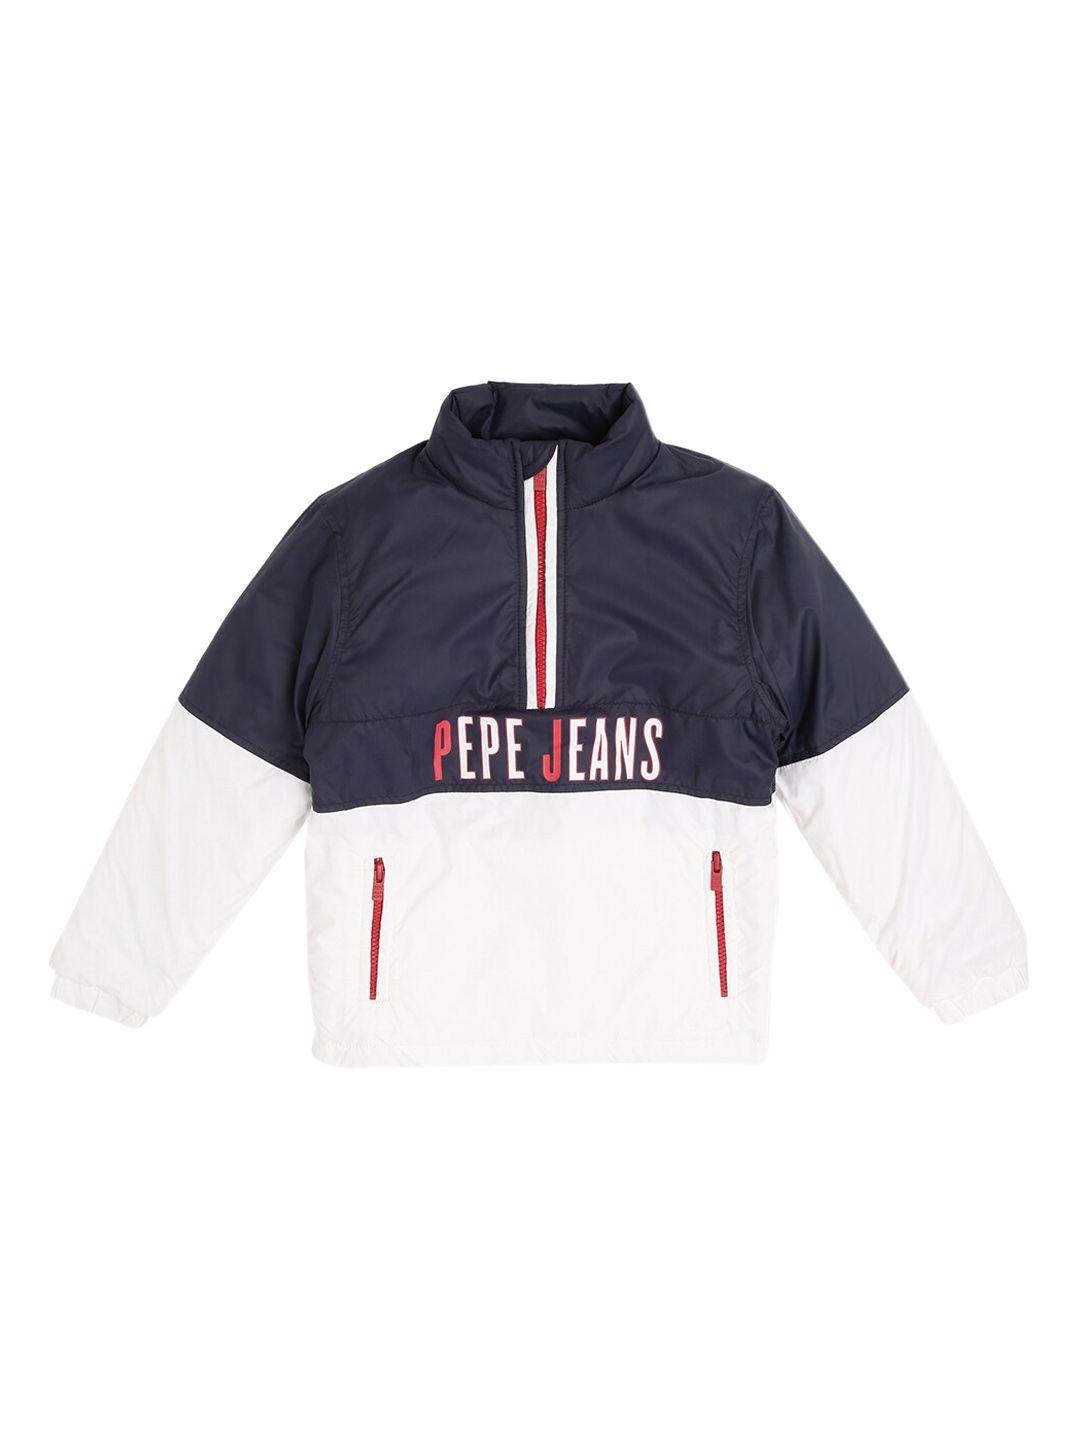 Pepe Jeans Boys White Navy Blue Sporty Jacket